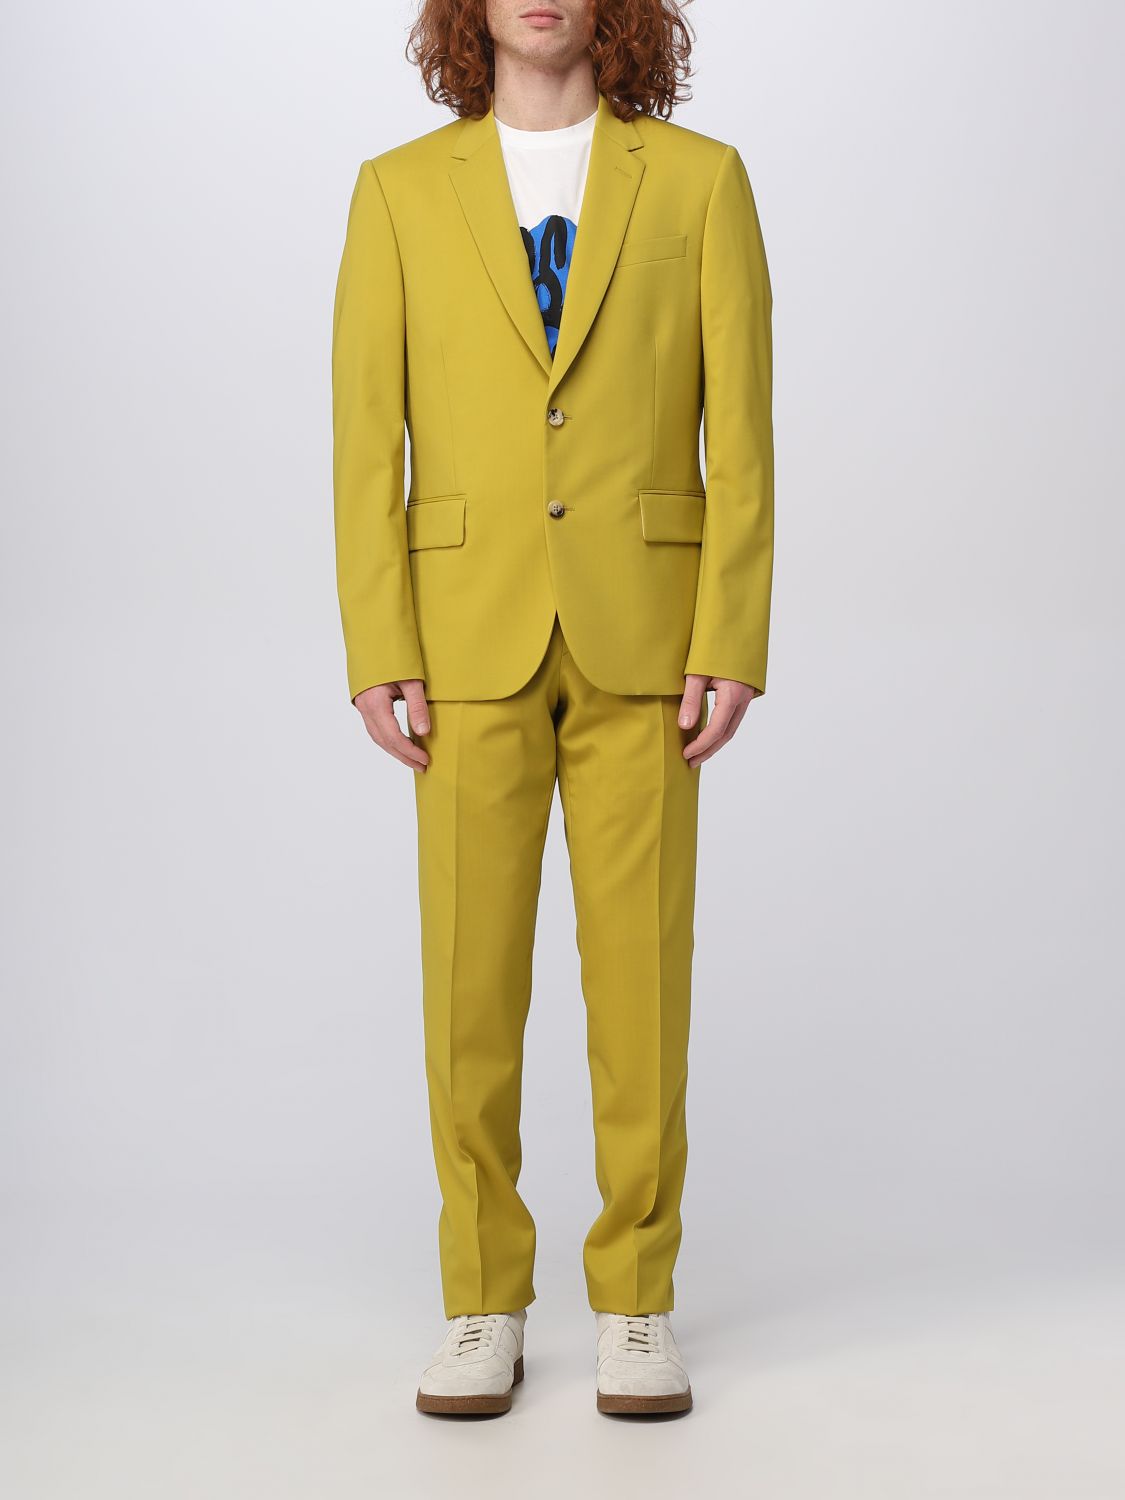 PAUL SMITH: suit for man - Yellow | Paul Smith suit M1R1457K01625 ...